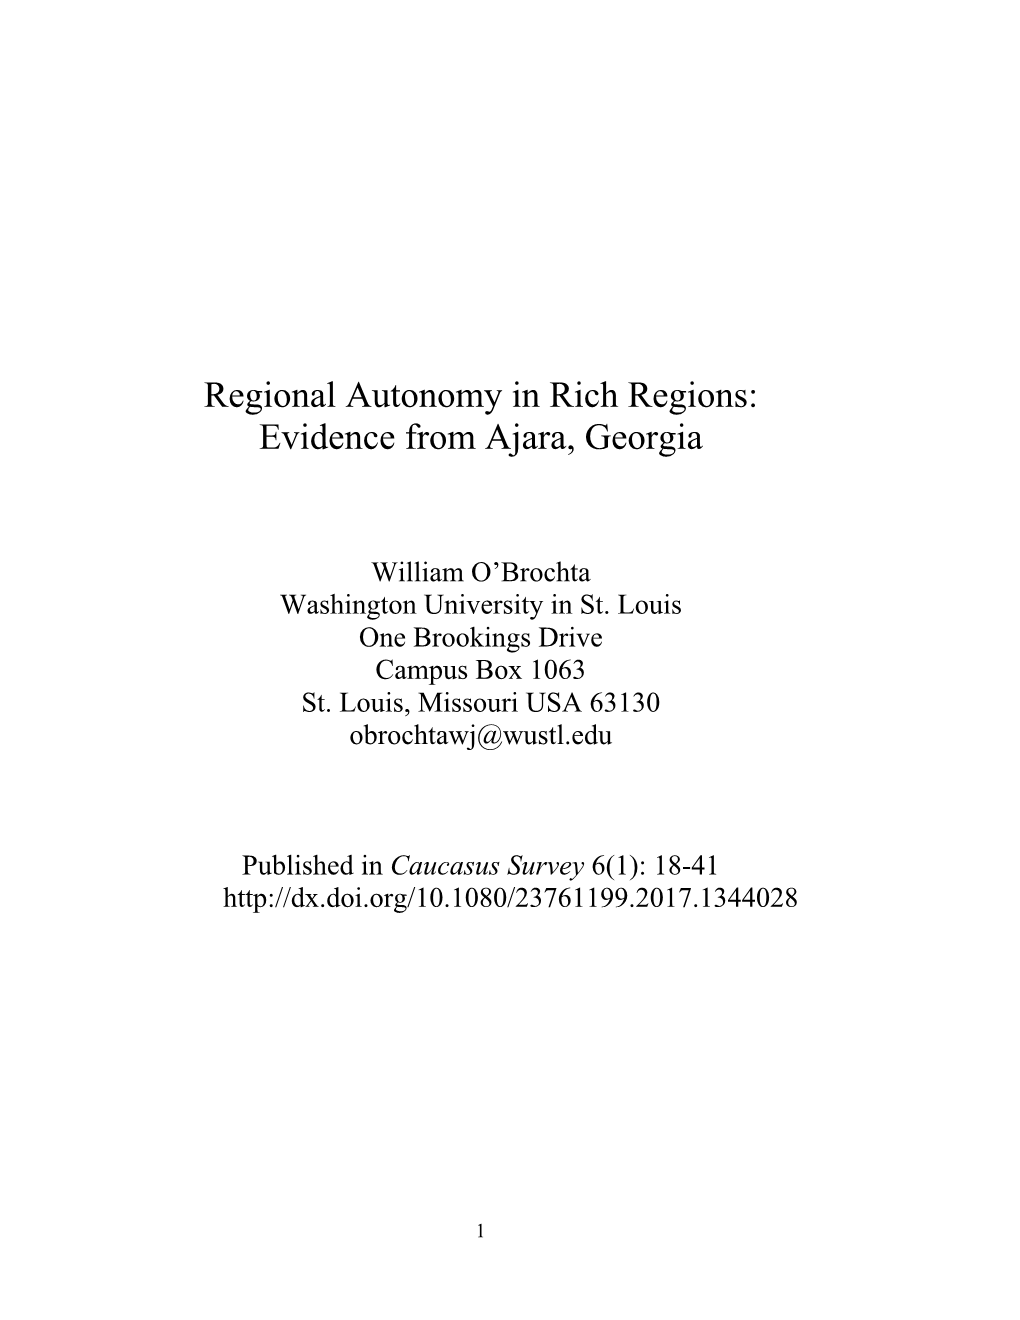 Regional Autonomy in Rich Regions: Evidence from Ajara, Georgia